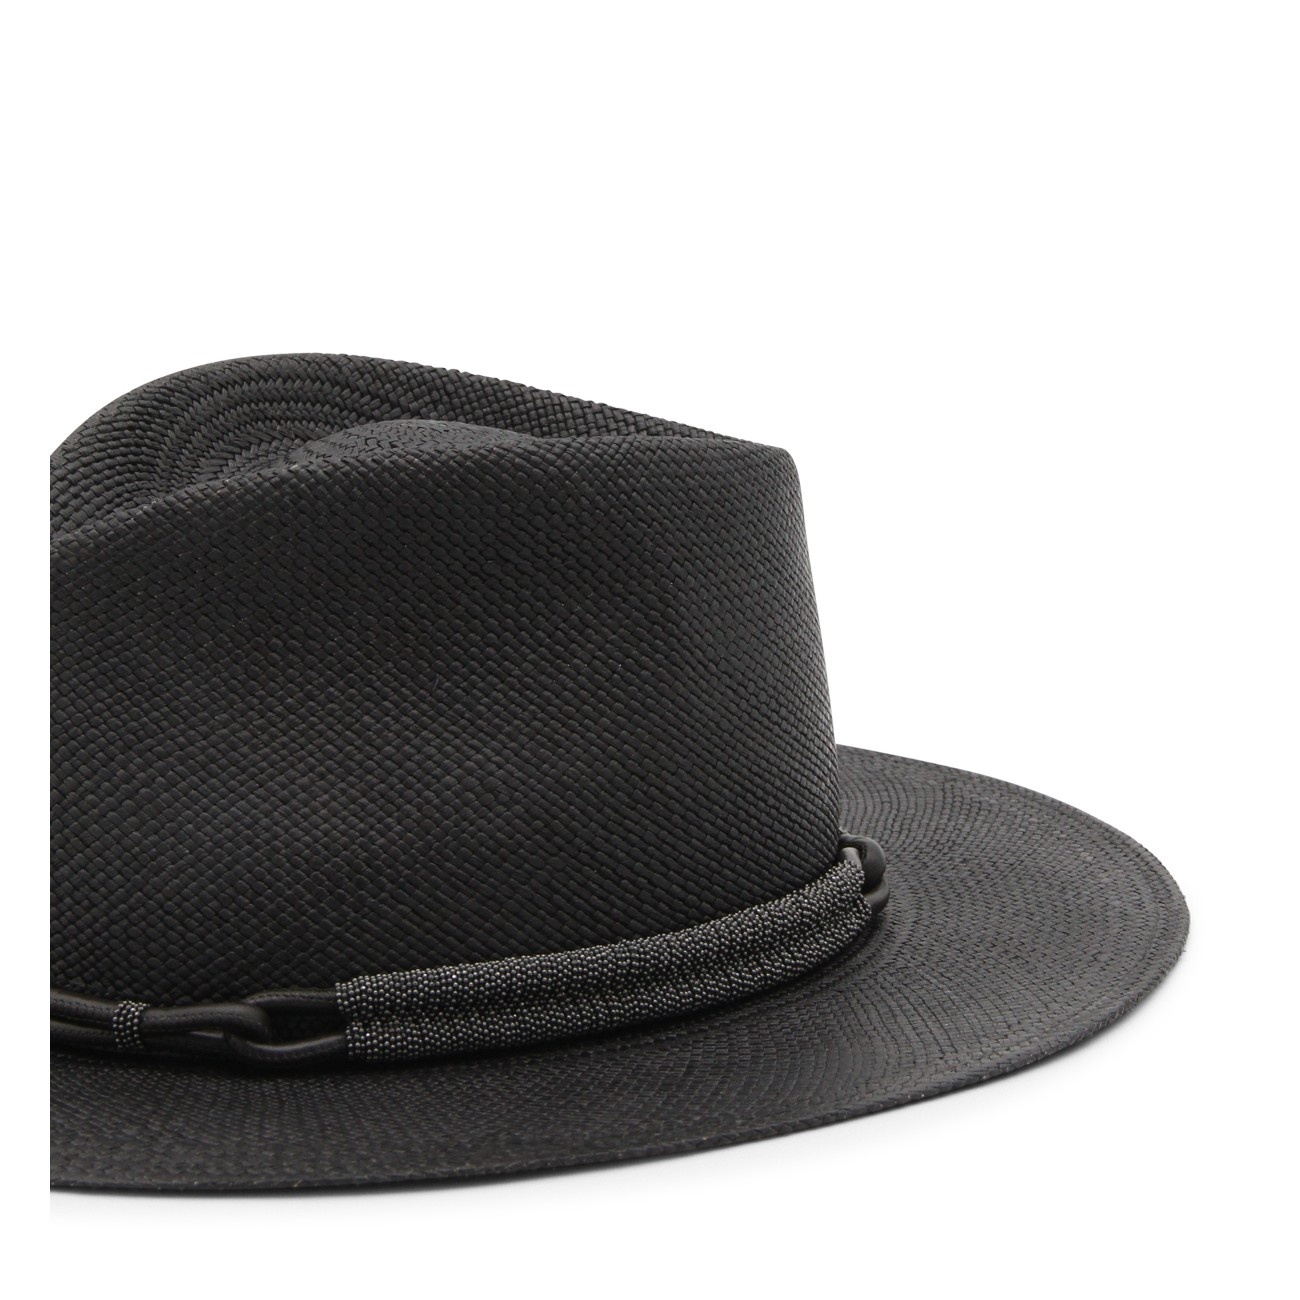 black fedora hat - 2